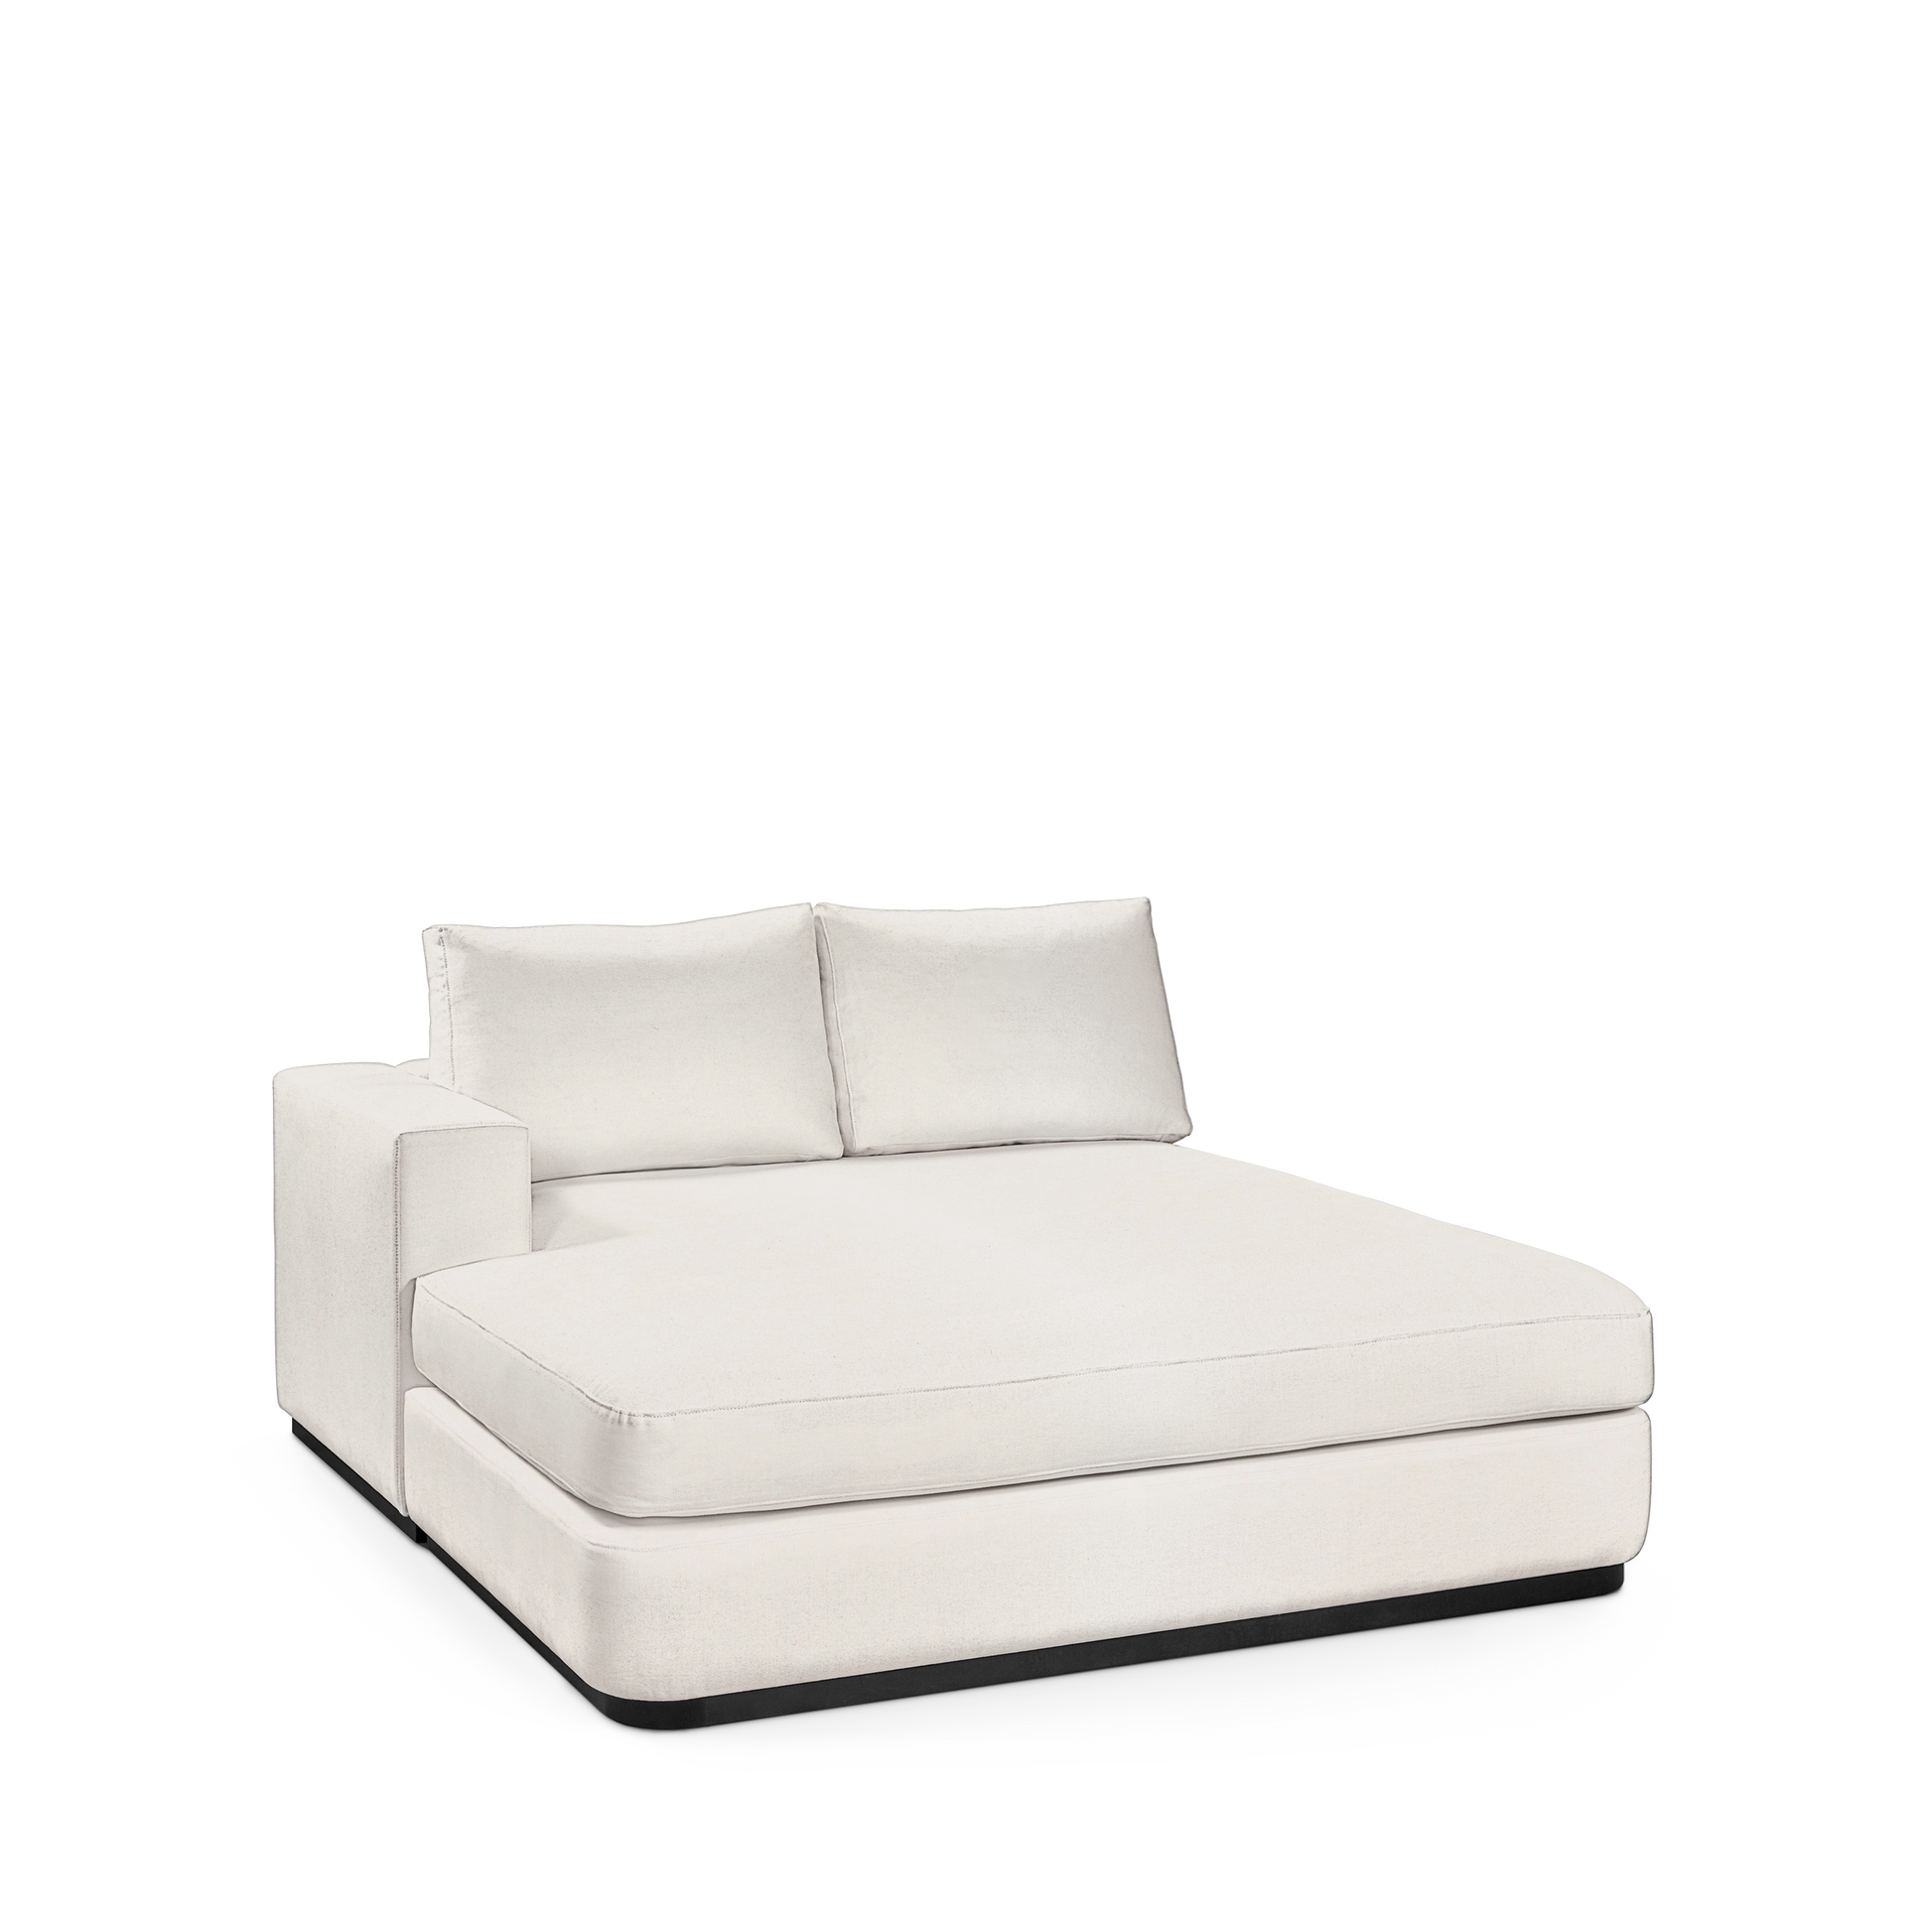 ATLAS 160 Lounge Bed arm rest left with bolt white textile